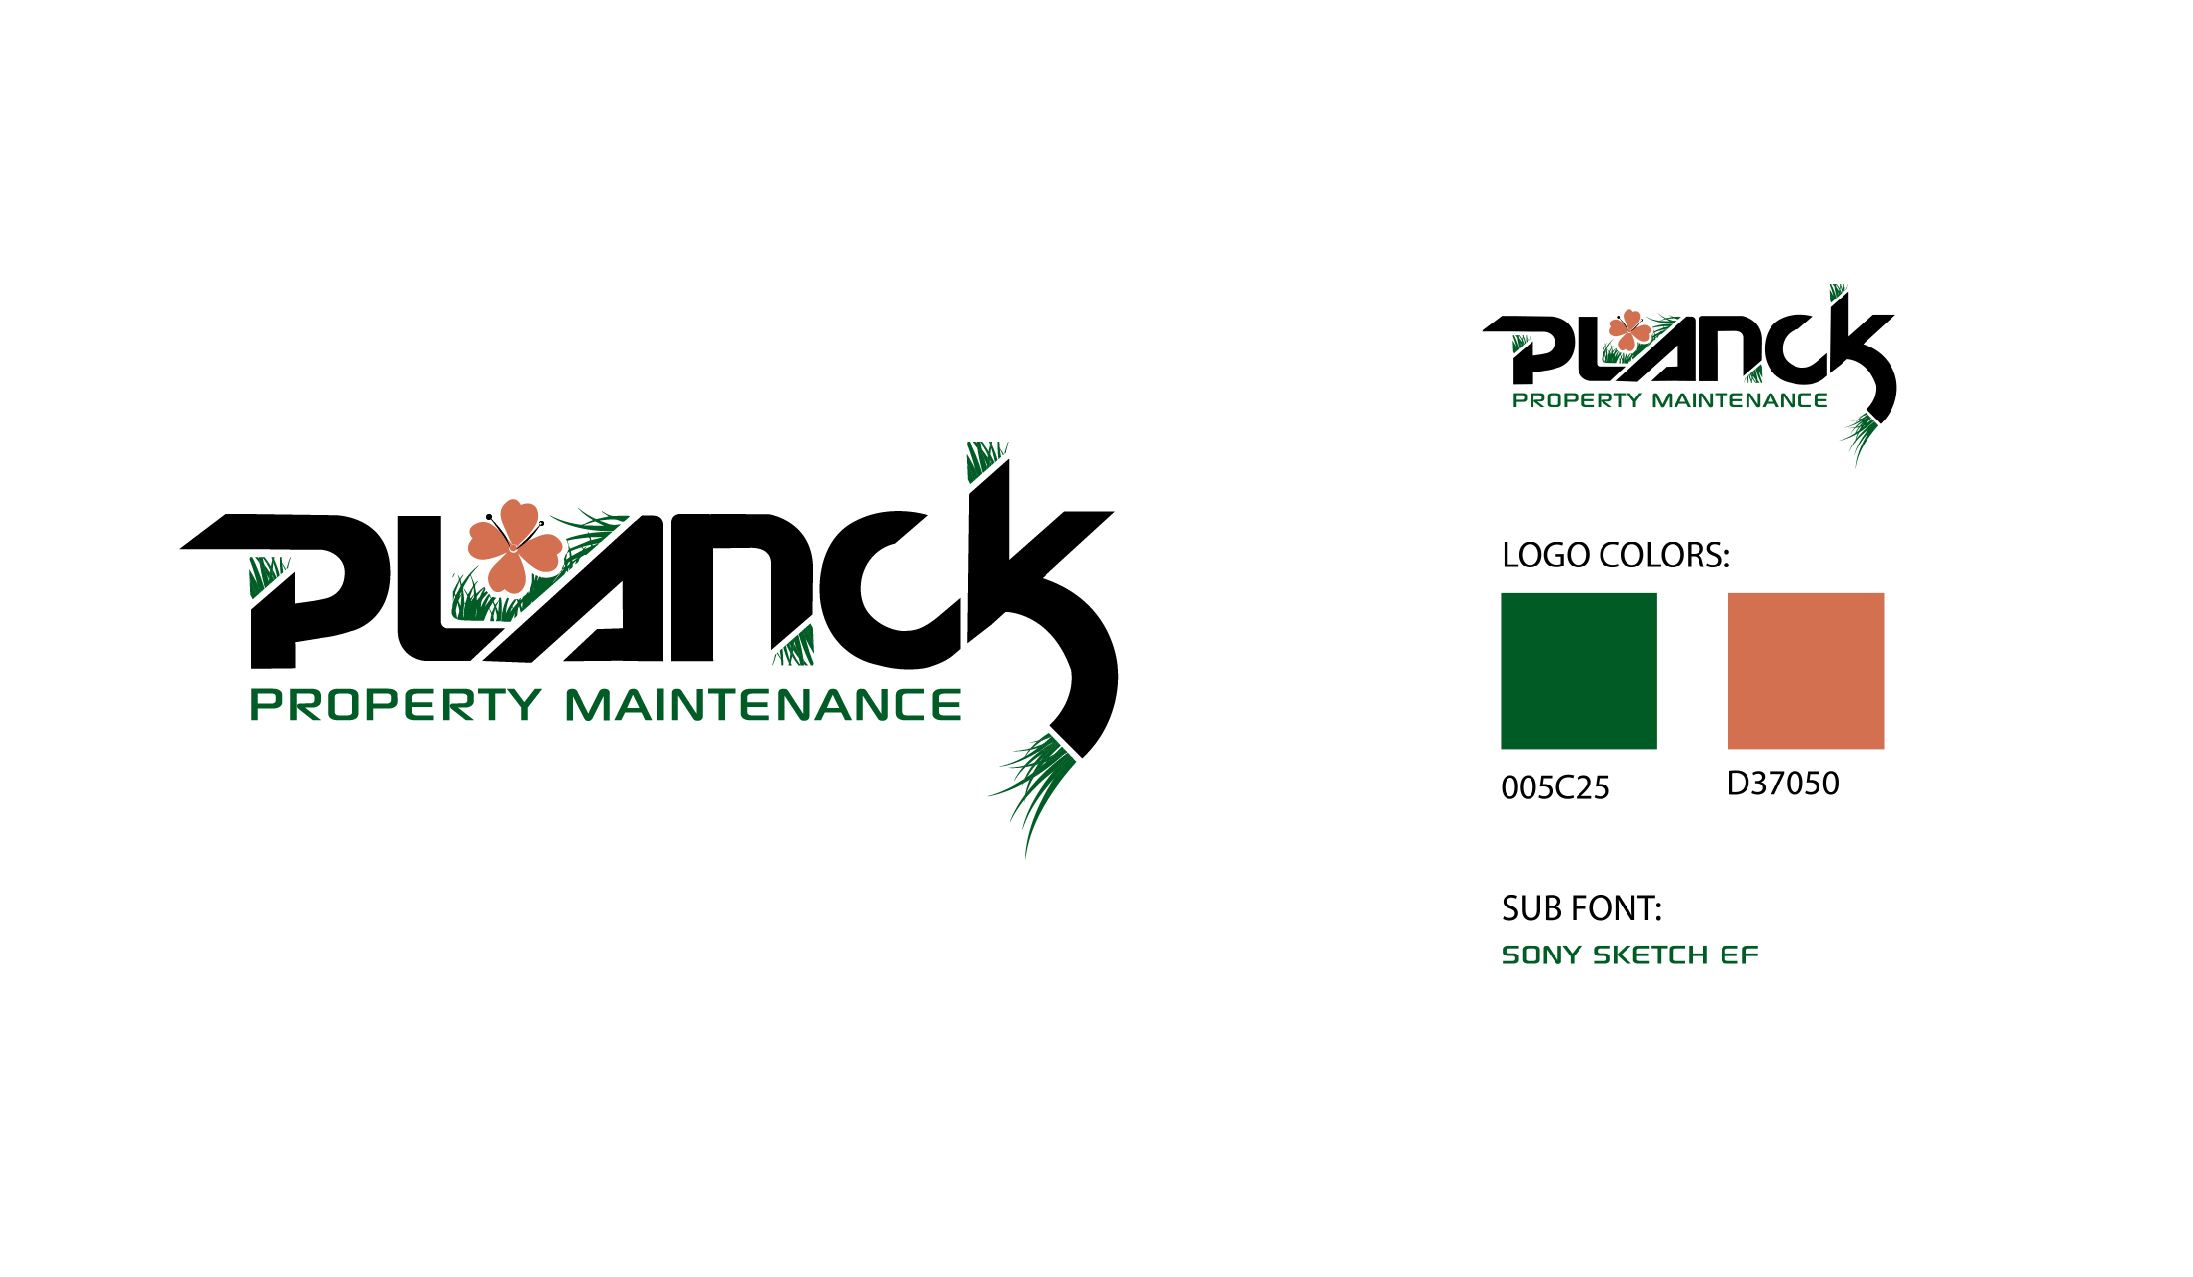 Planck Property Maintenance